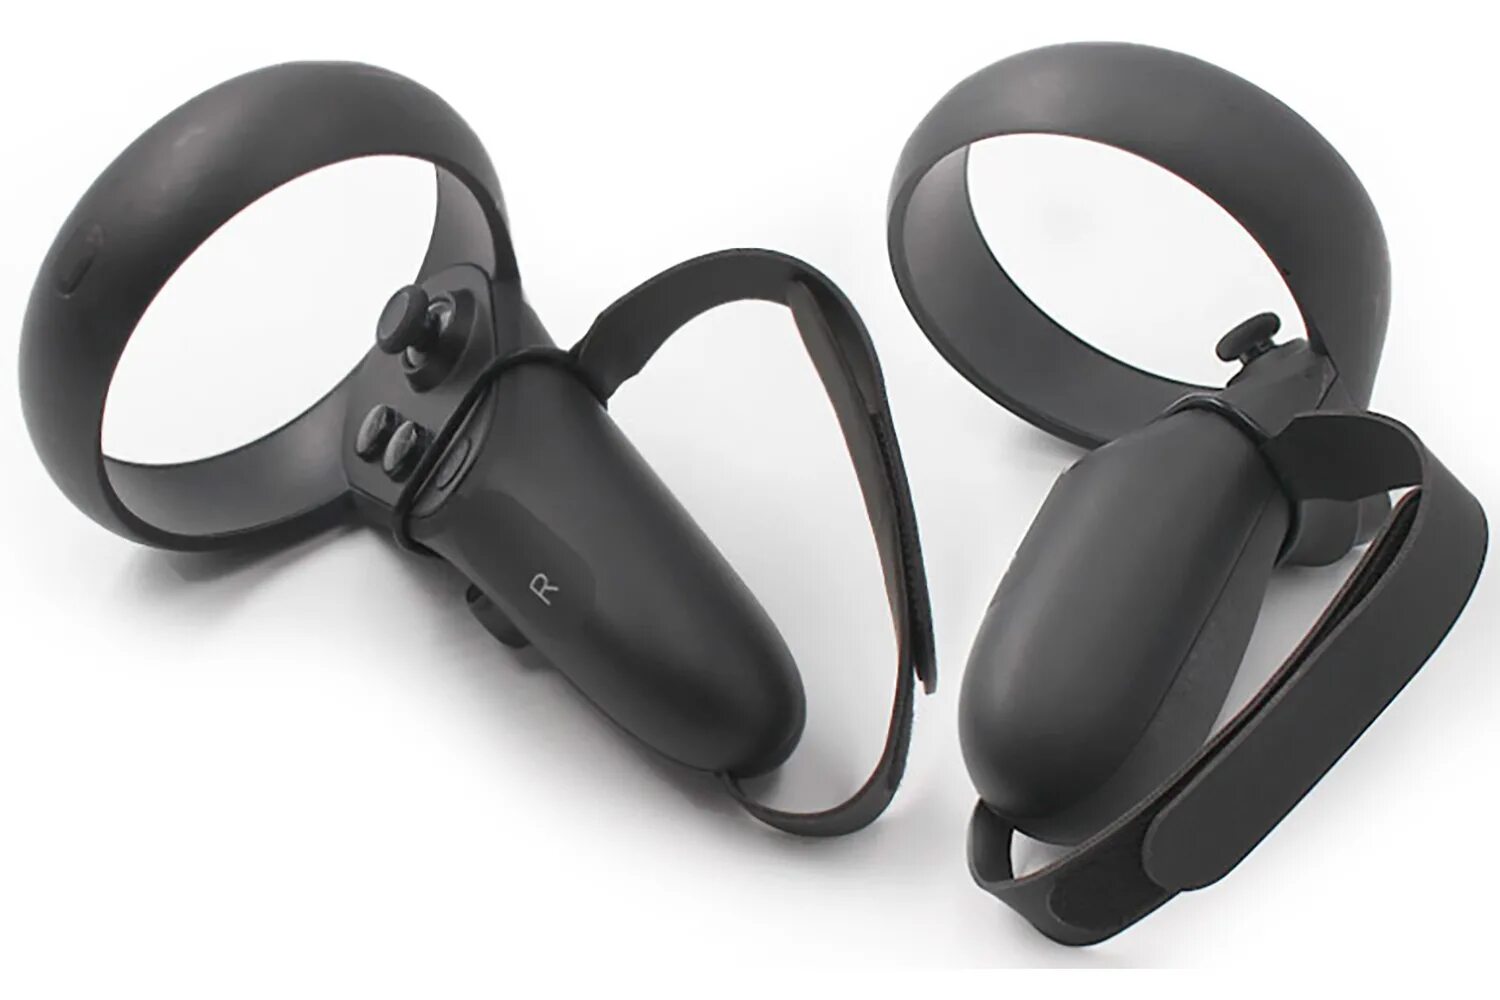 VR контроллеры Oculus Touch. Ремешок Oculus Quest 2. Ремешок Oculus Quest 2 джостик. Ремень на контроллер Окулус квест 2. Vr touch